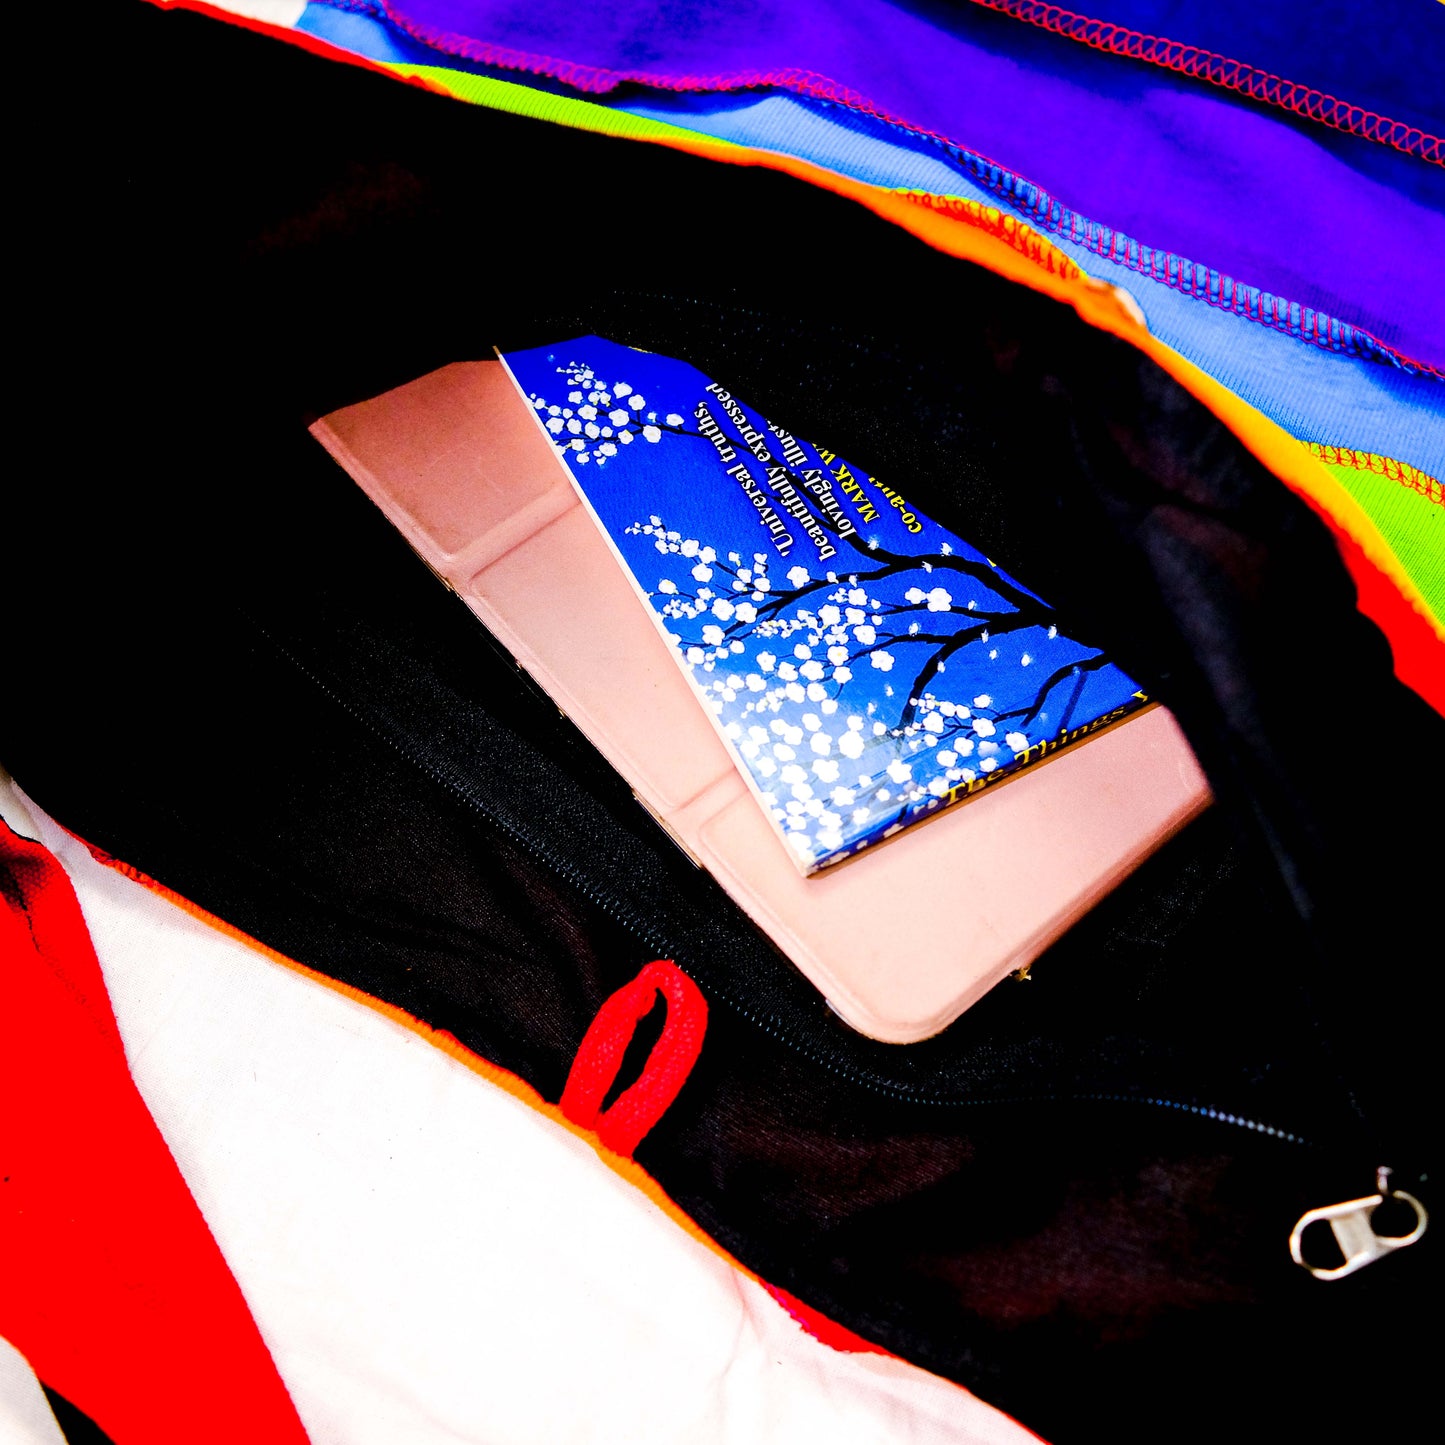 Rainbow Unisex Cotton Cross Body Bag